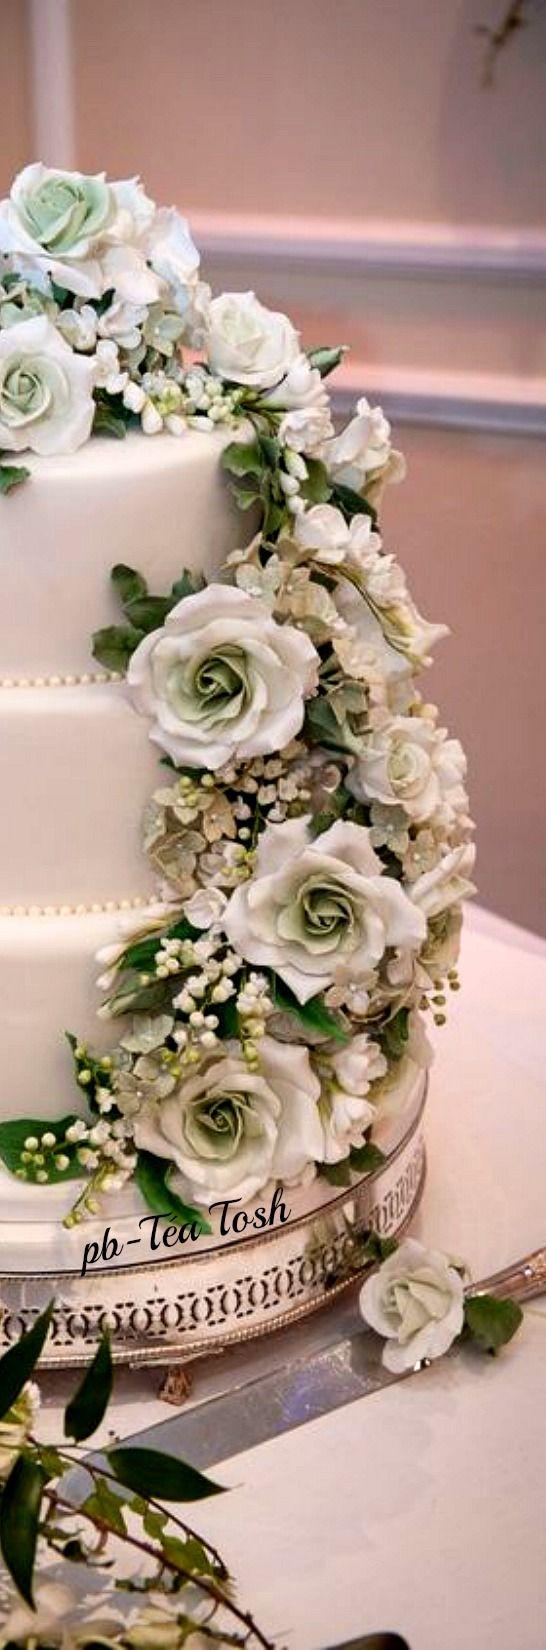 زفاف - Beautiful Floral Wedding Cake